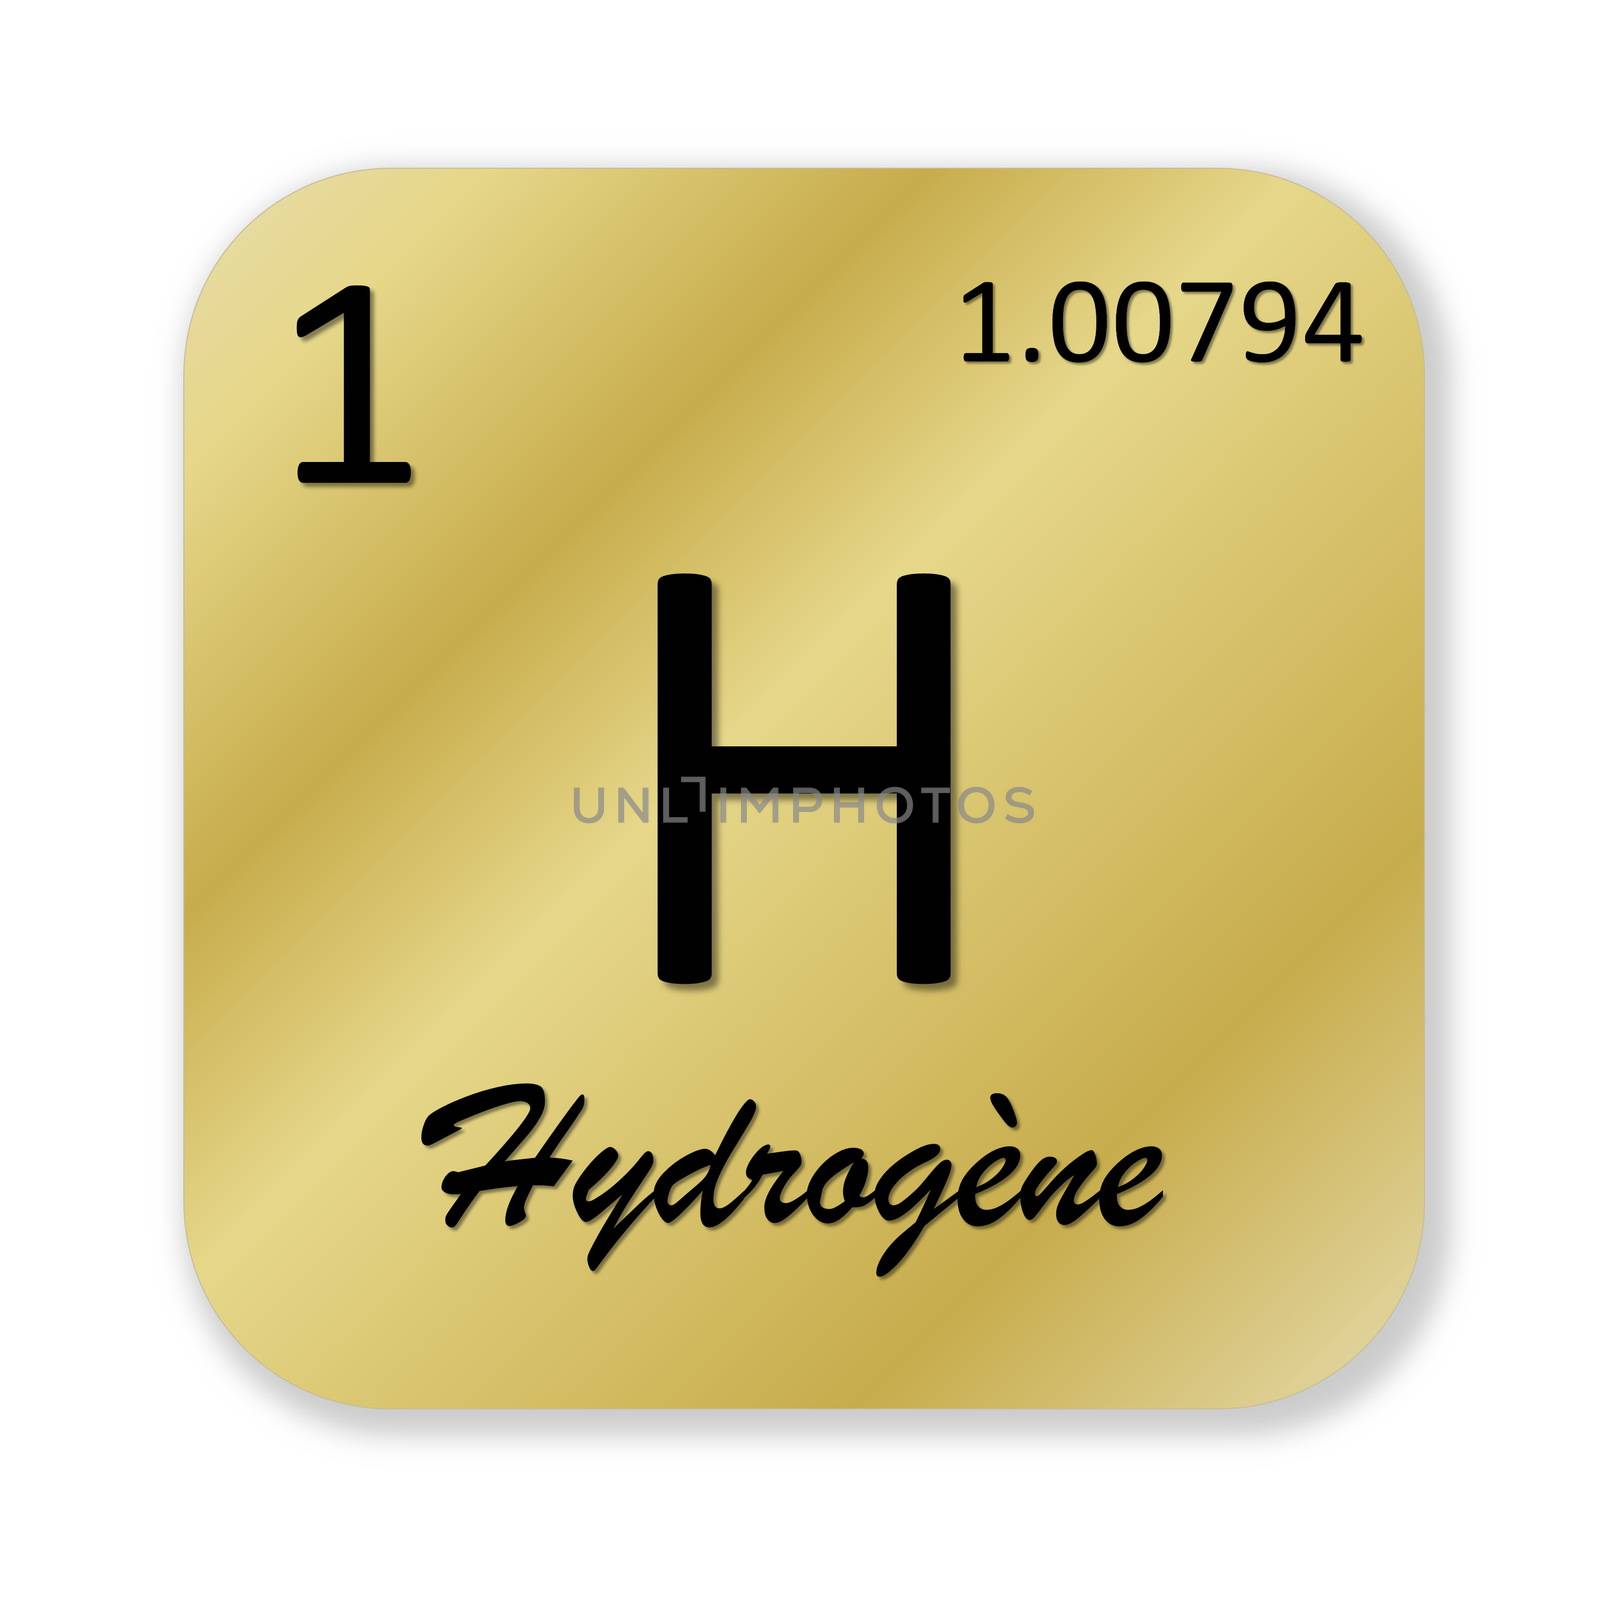 Hydrogen element, french hydrogene by Elenaphotos21